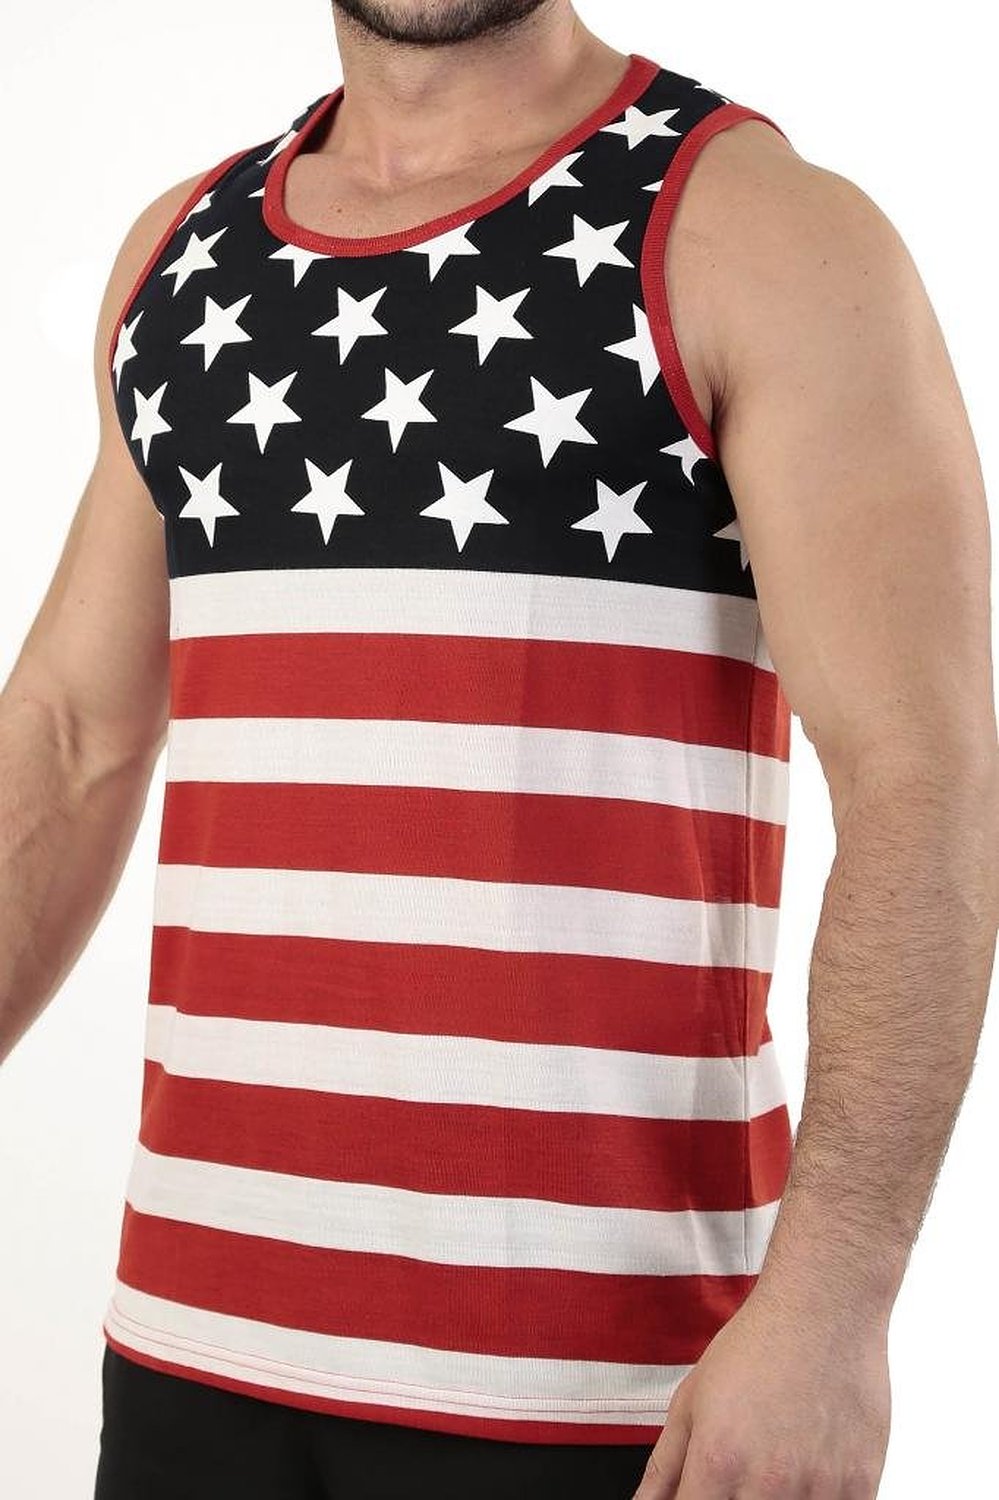 Patriotic American US Flag Stripes And Stars Tank Top Shirt Adult Men's